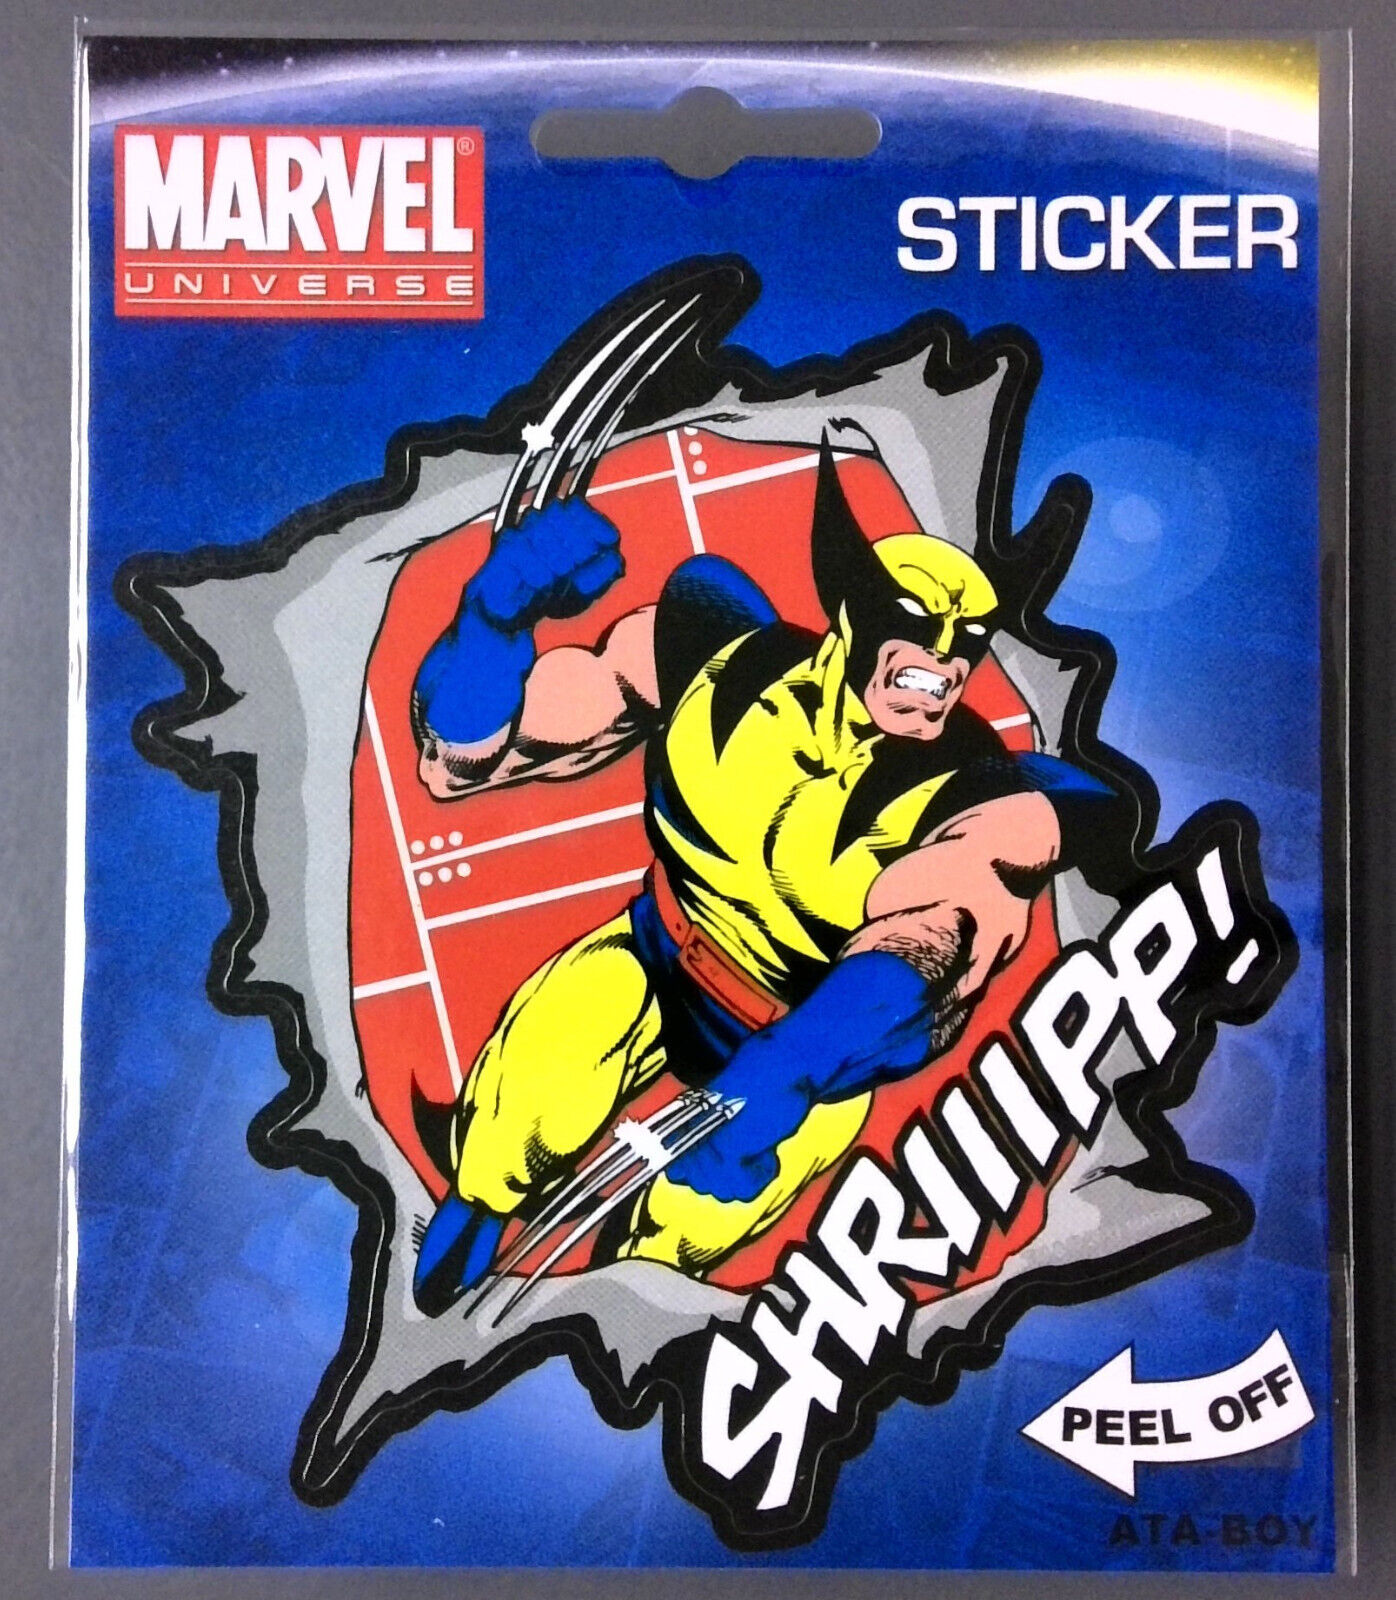 Marvel Universe Stickers #45186S WOLVERINE (shriiipp) - Ata-Boy Inc. 2011